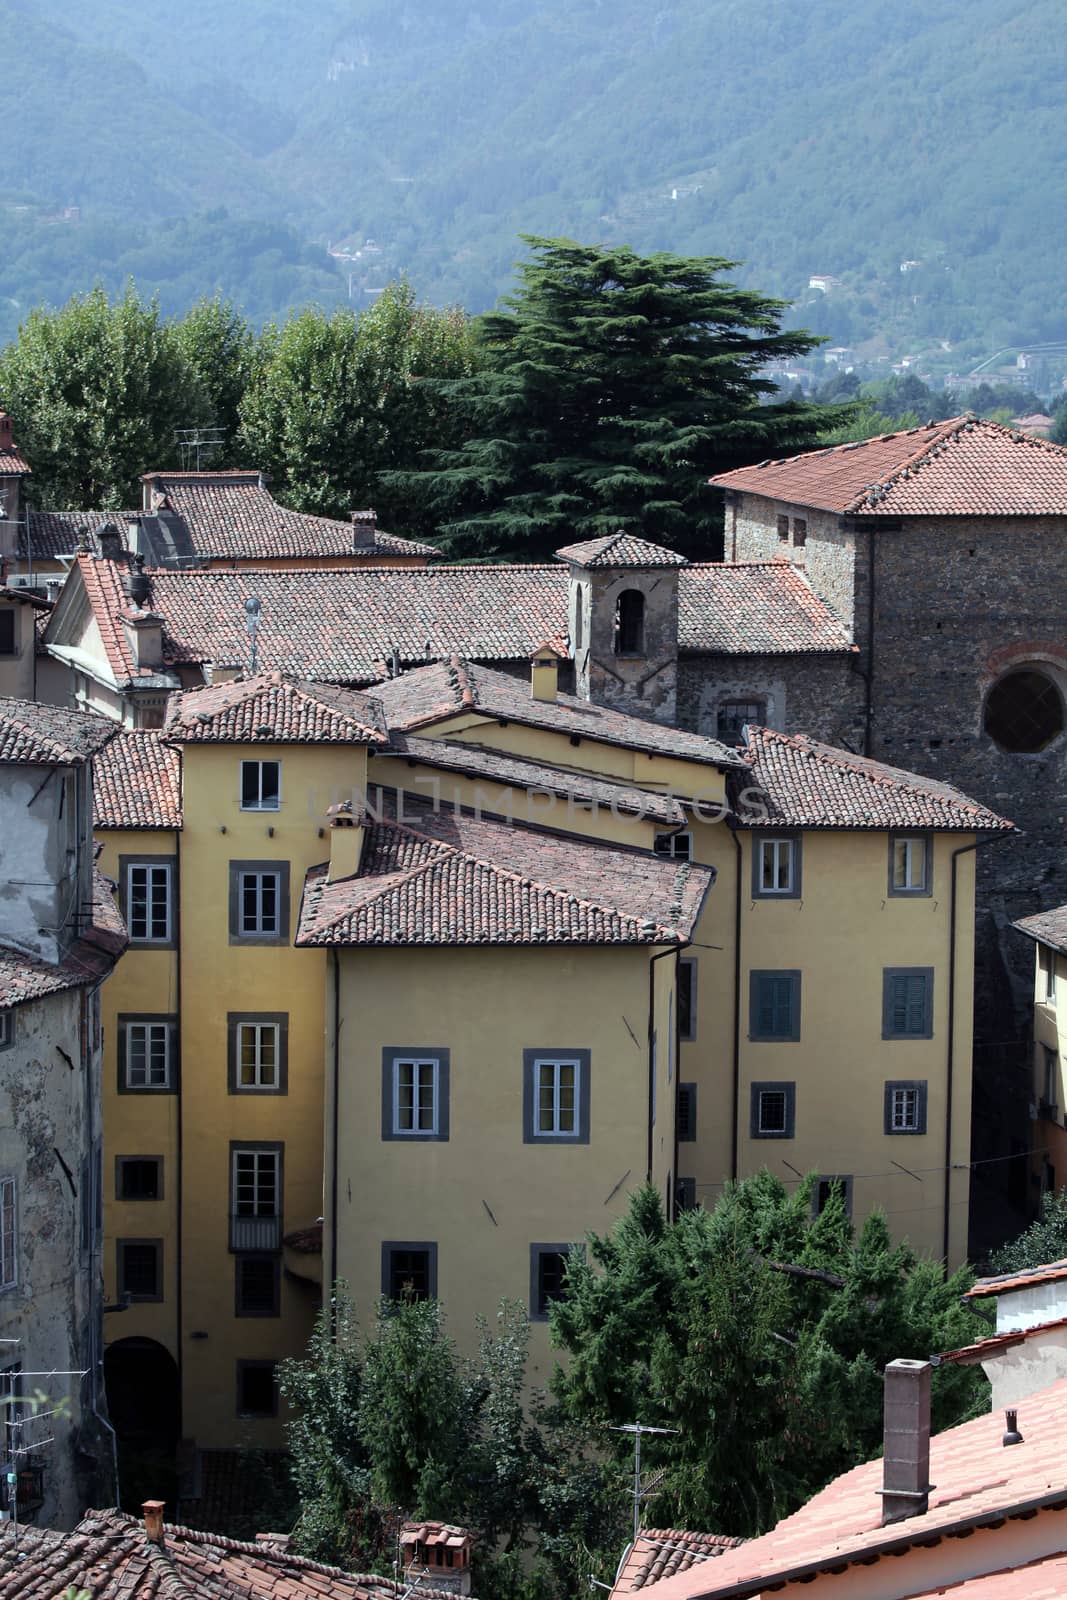 Barga a medieval hilltop town in Tuscany. by wjarek